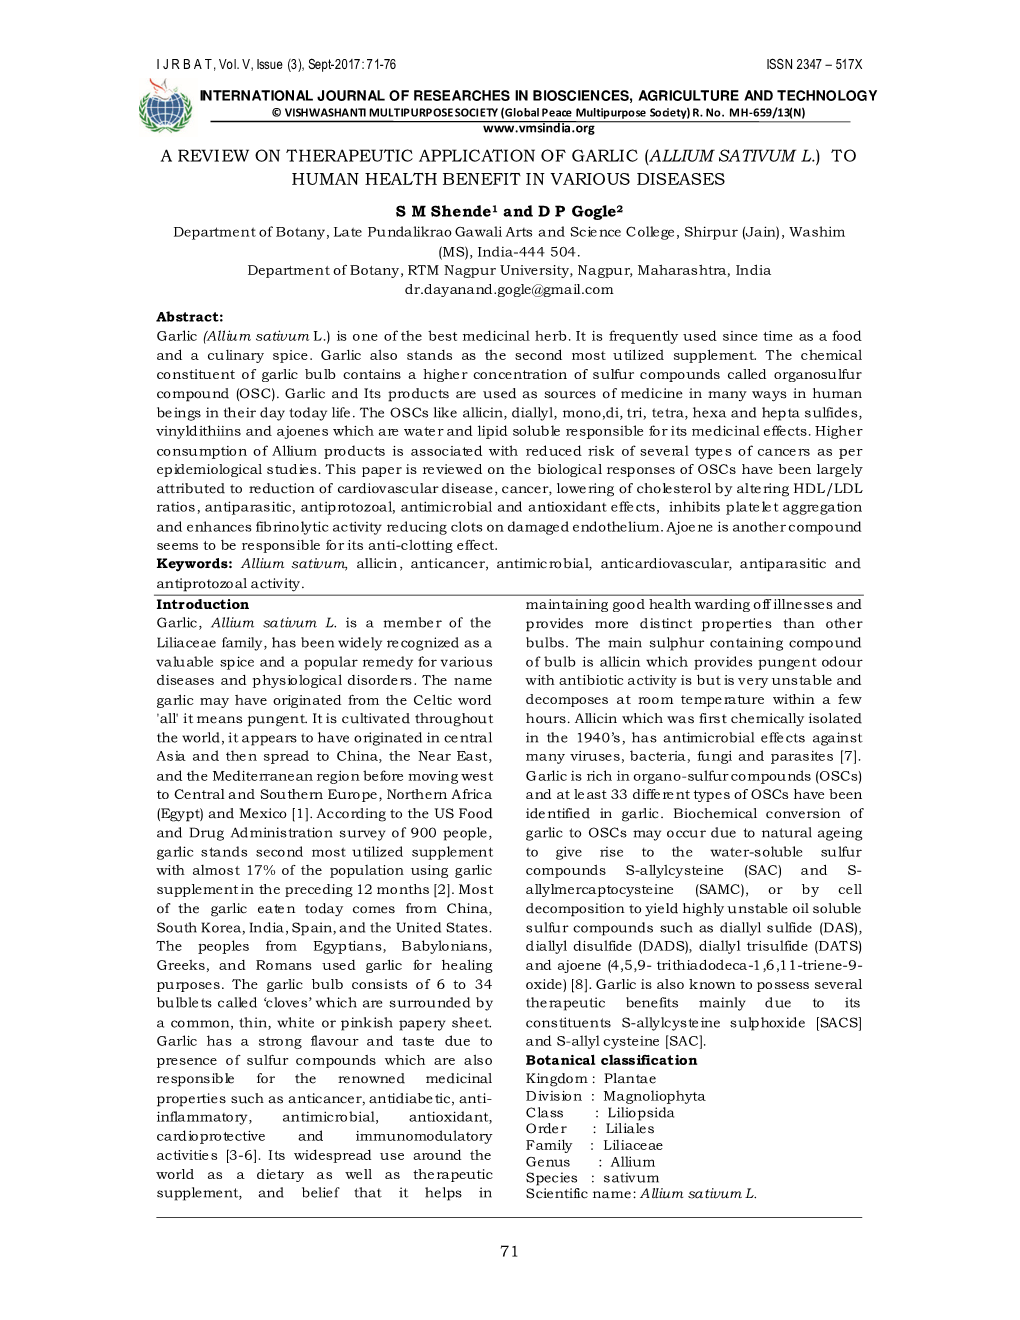 Allium Sativum L. ) to Human Health Benefit in Various Diseases